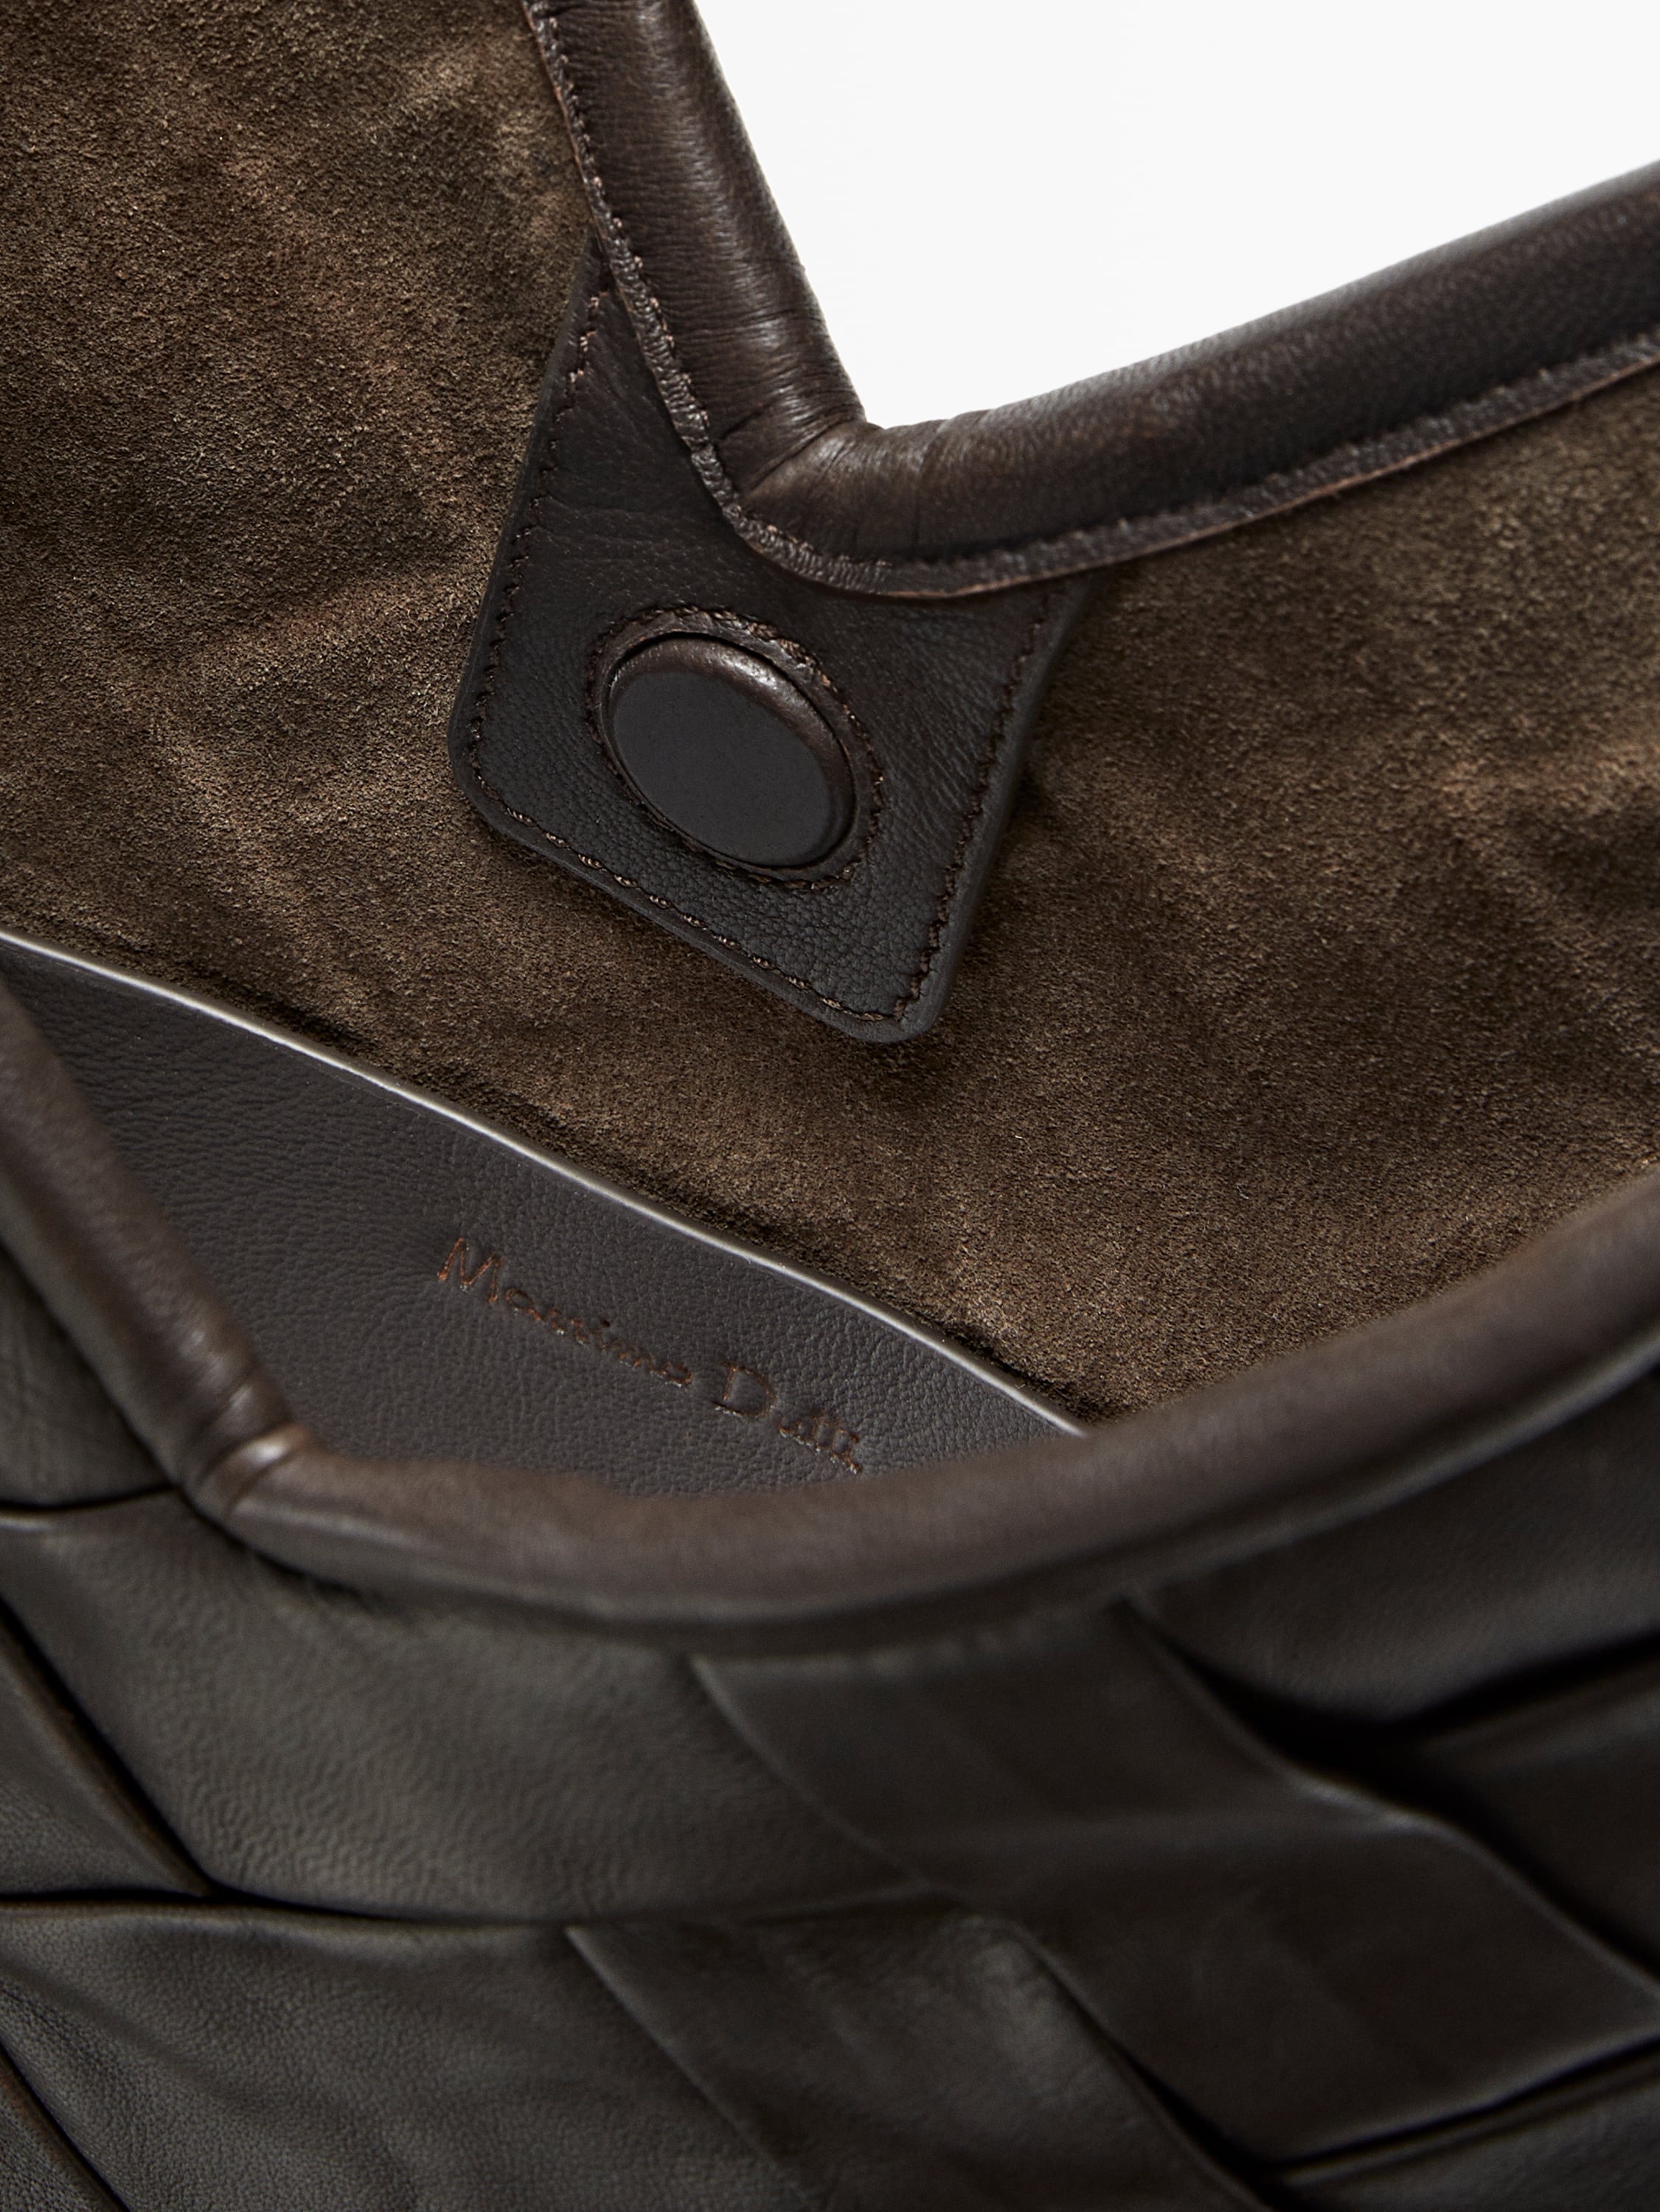 Woven nappa leather V-shaped crossbody bag